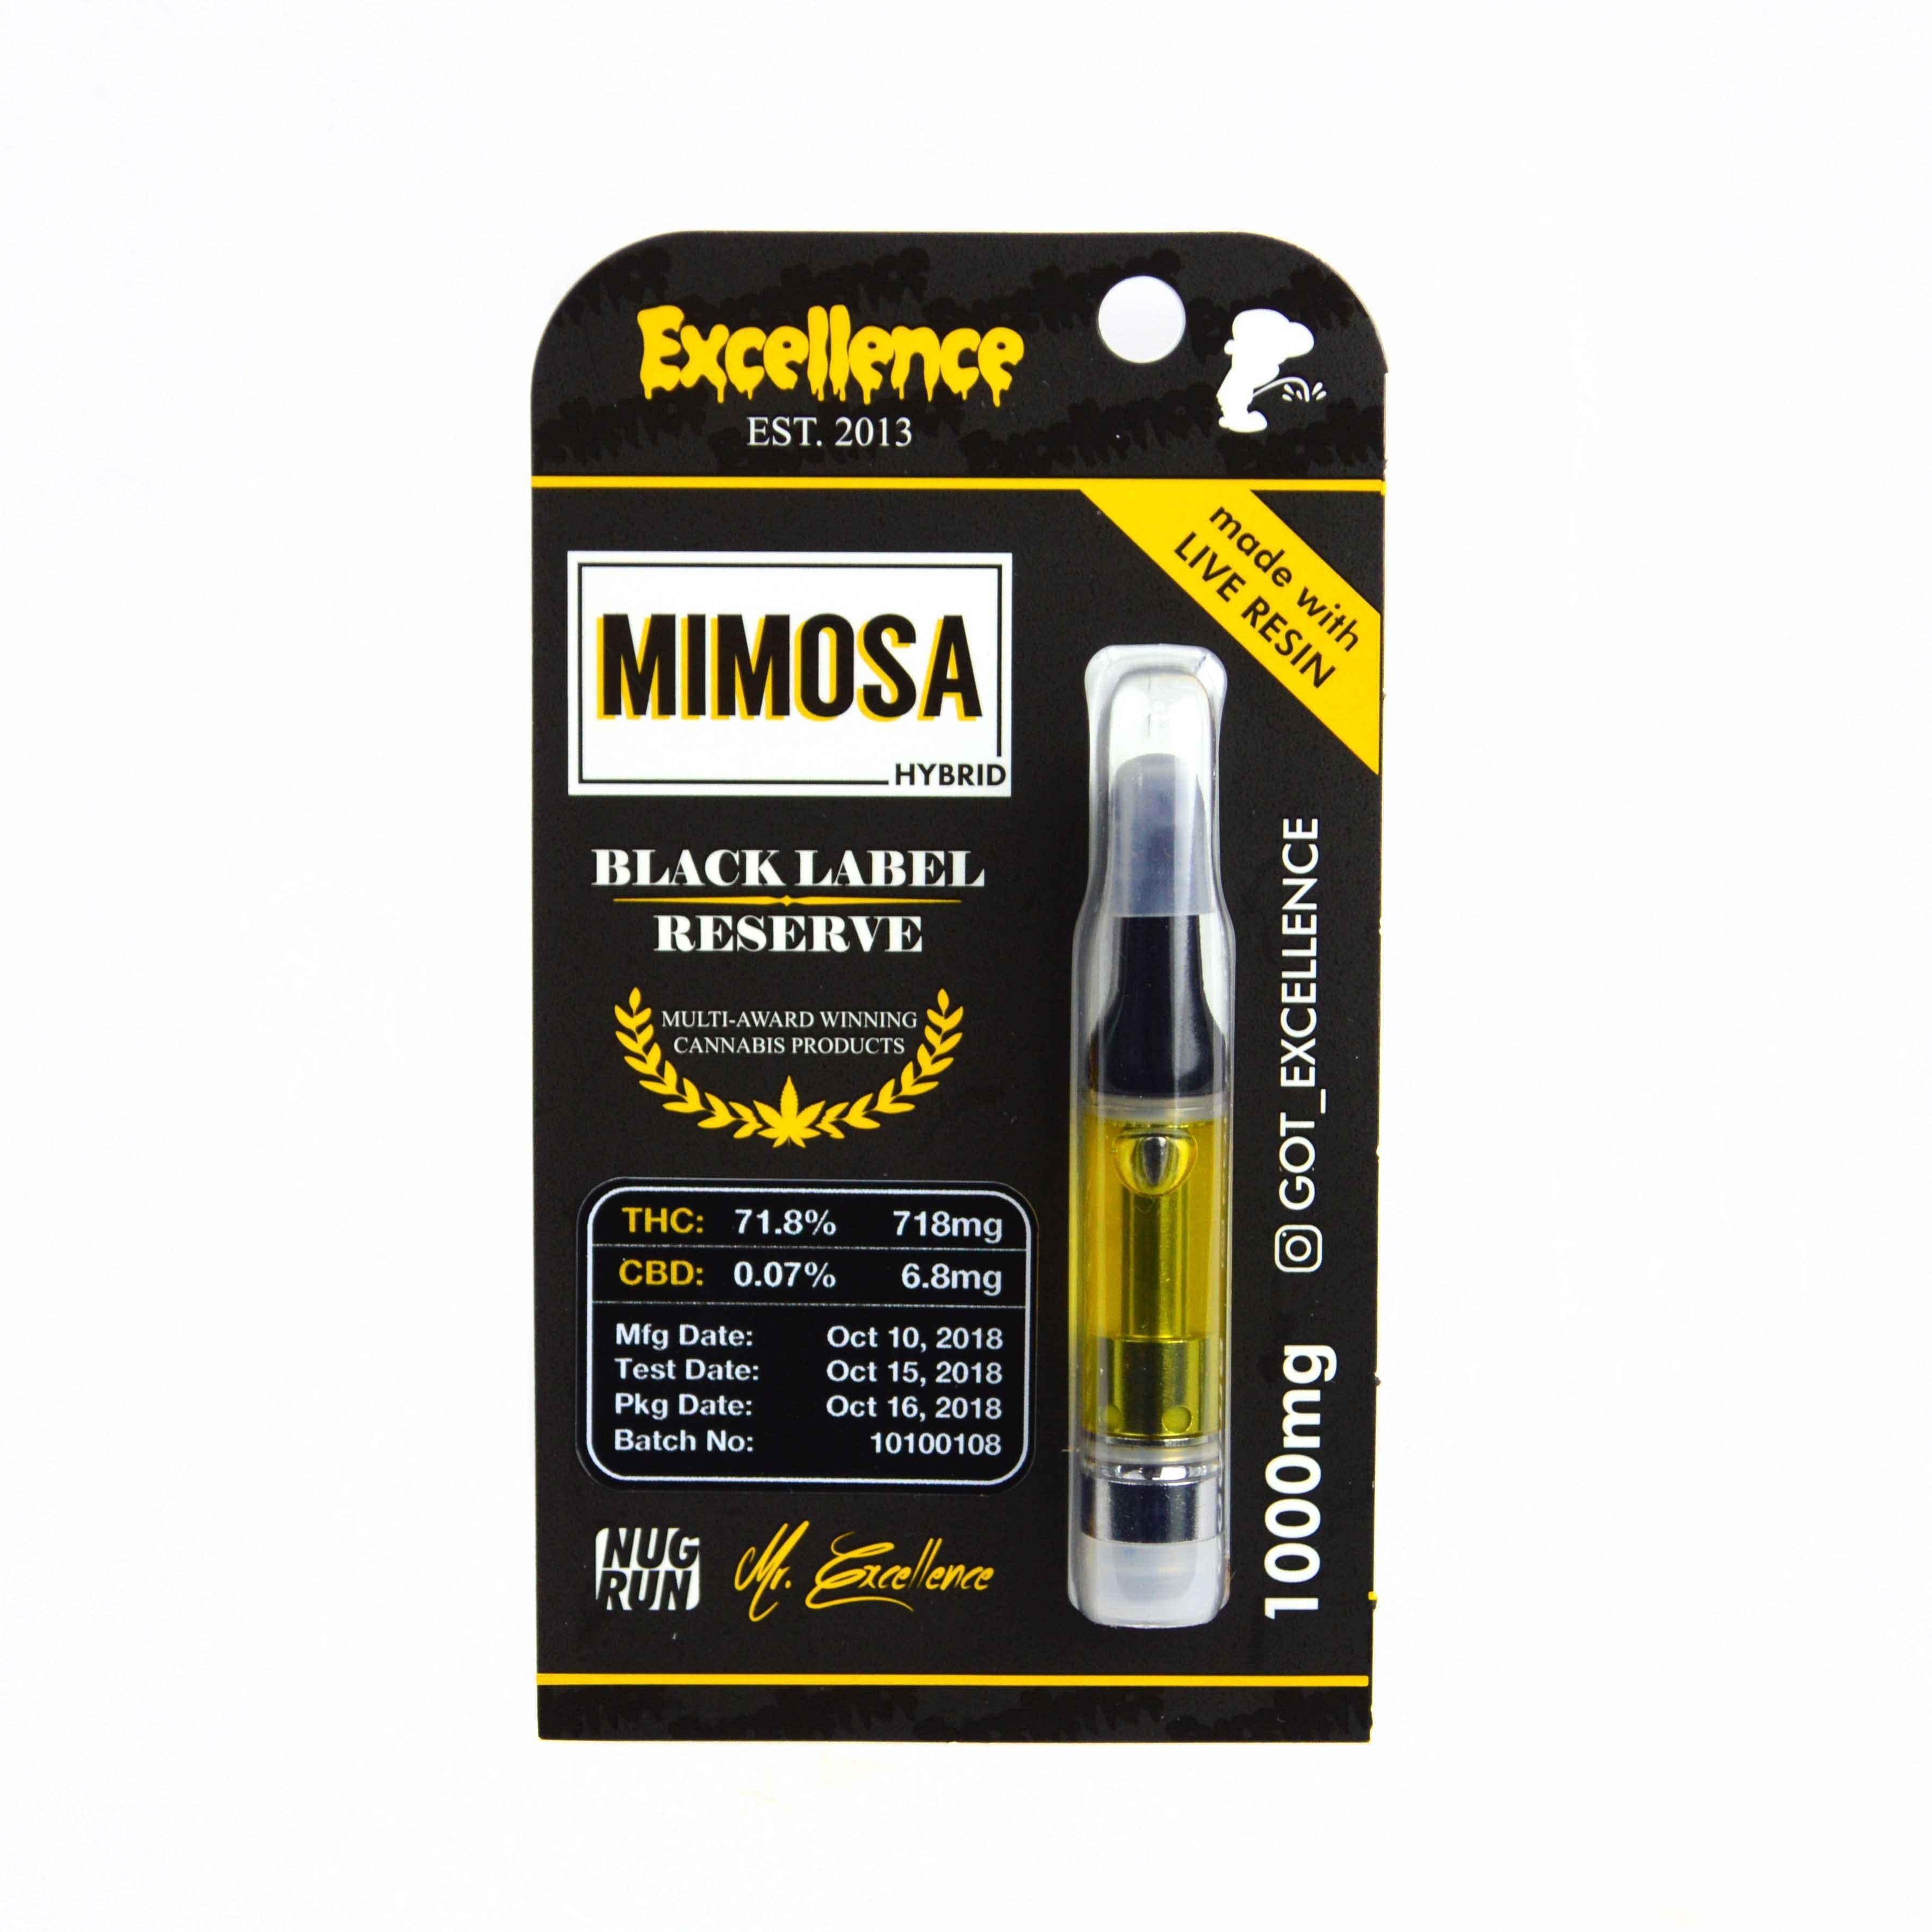 Mimosa - Black Label Reserve